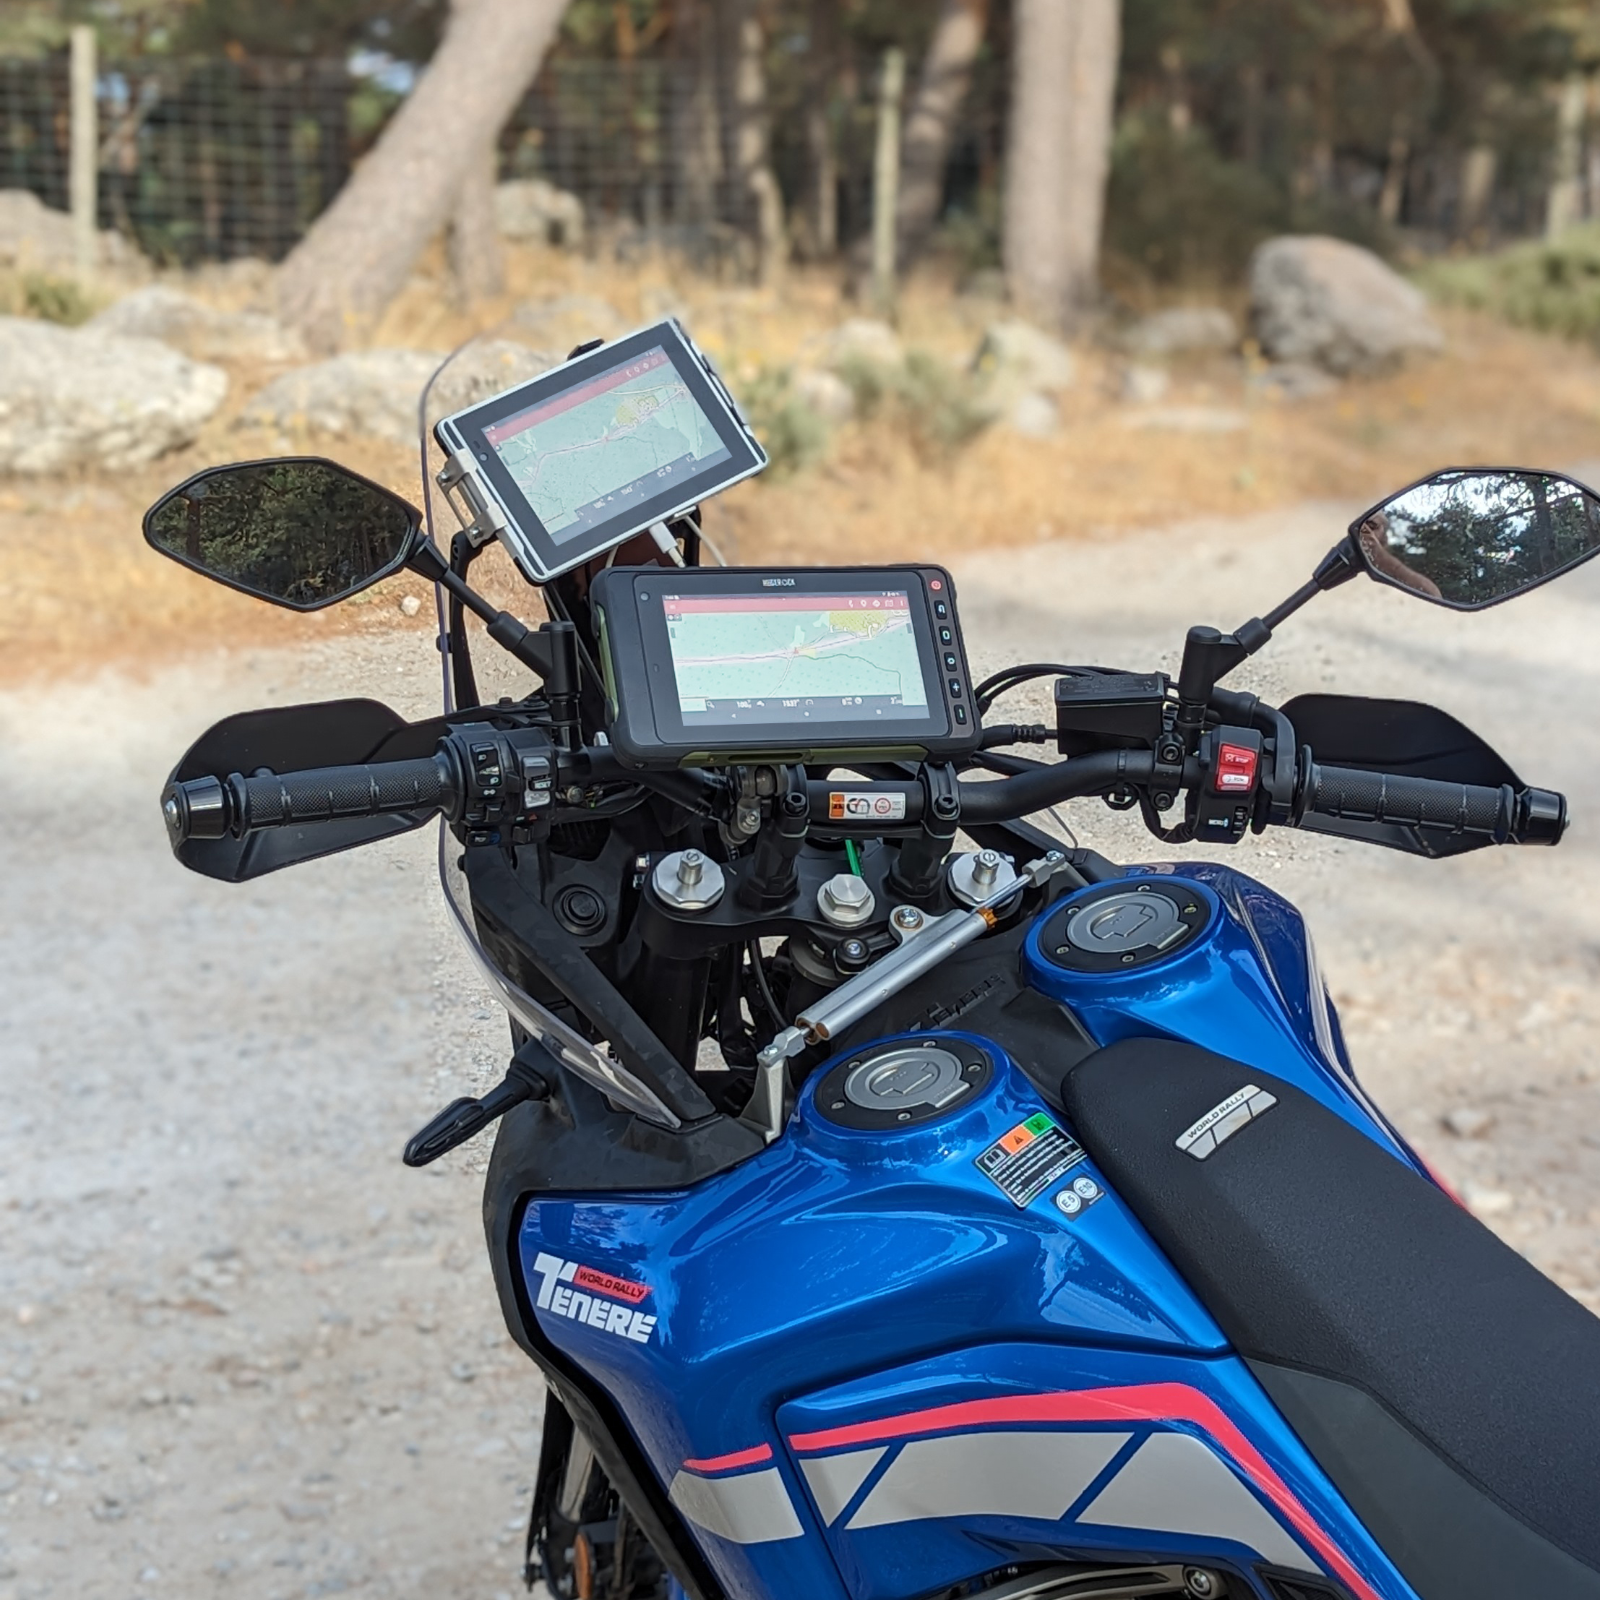 Hugerock X70 Motor Mount Bracket for Motorcycle Bike Vehicle Tablet Display Accessories Multi-angle Adjustable Easy Installation